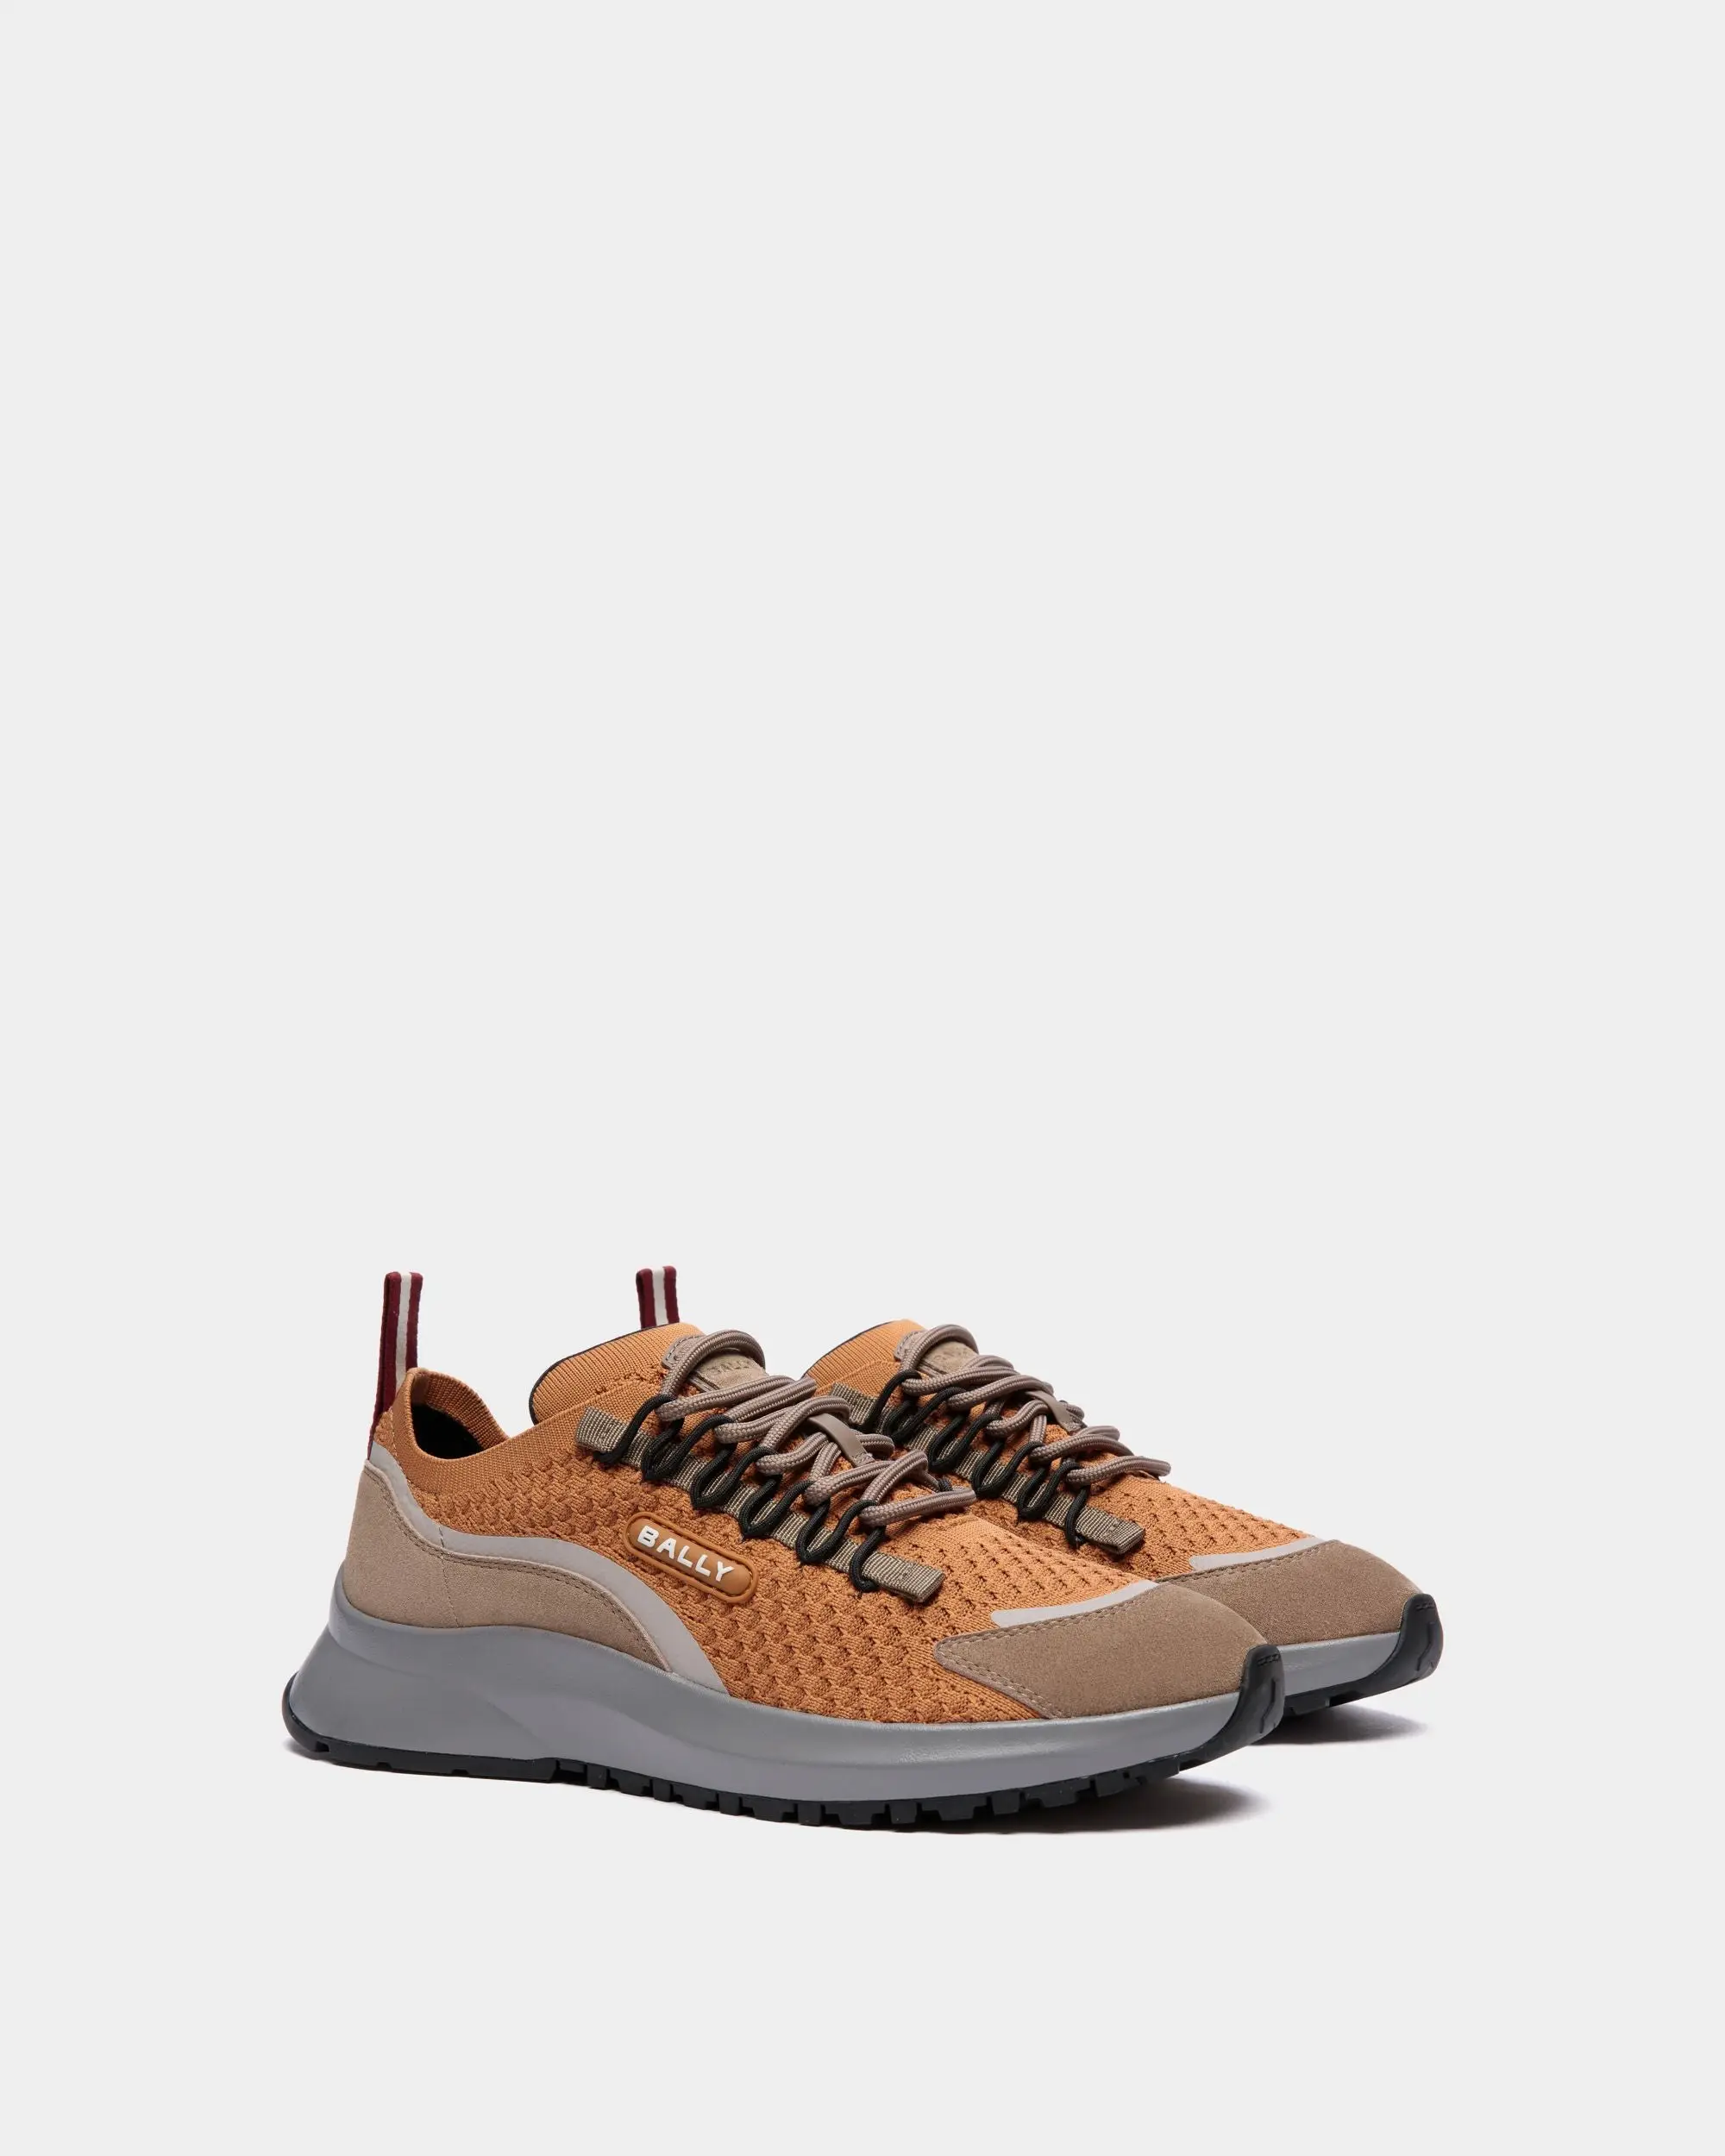 Outline Sneaker in Brown Nylon